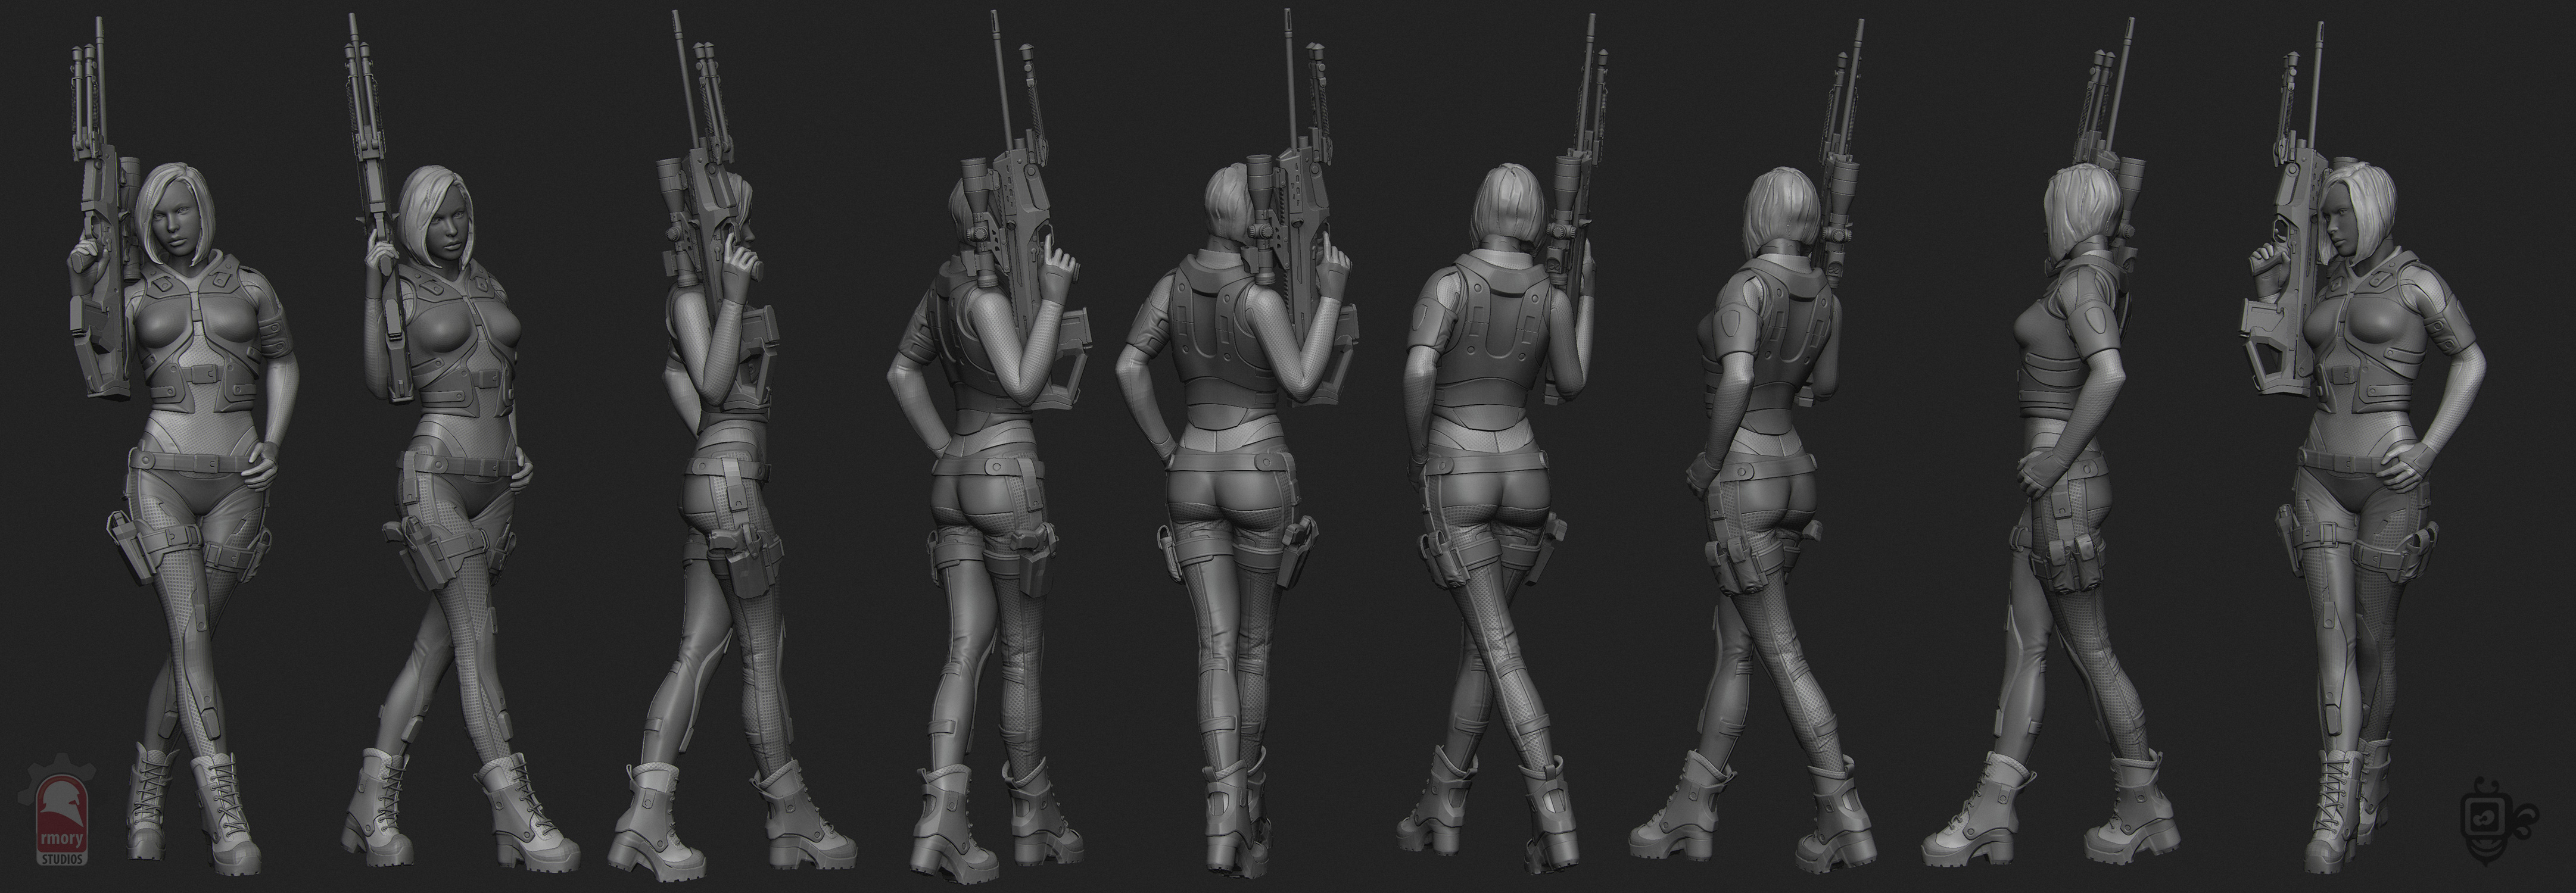 Female Combat Suit by VertexBee on DeviantArt